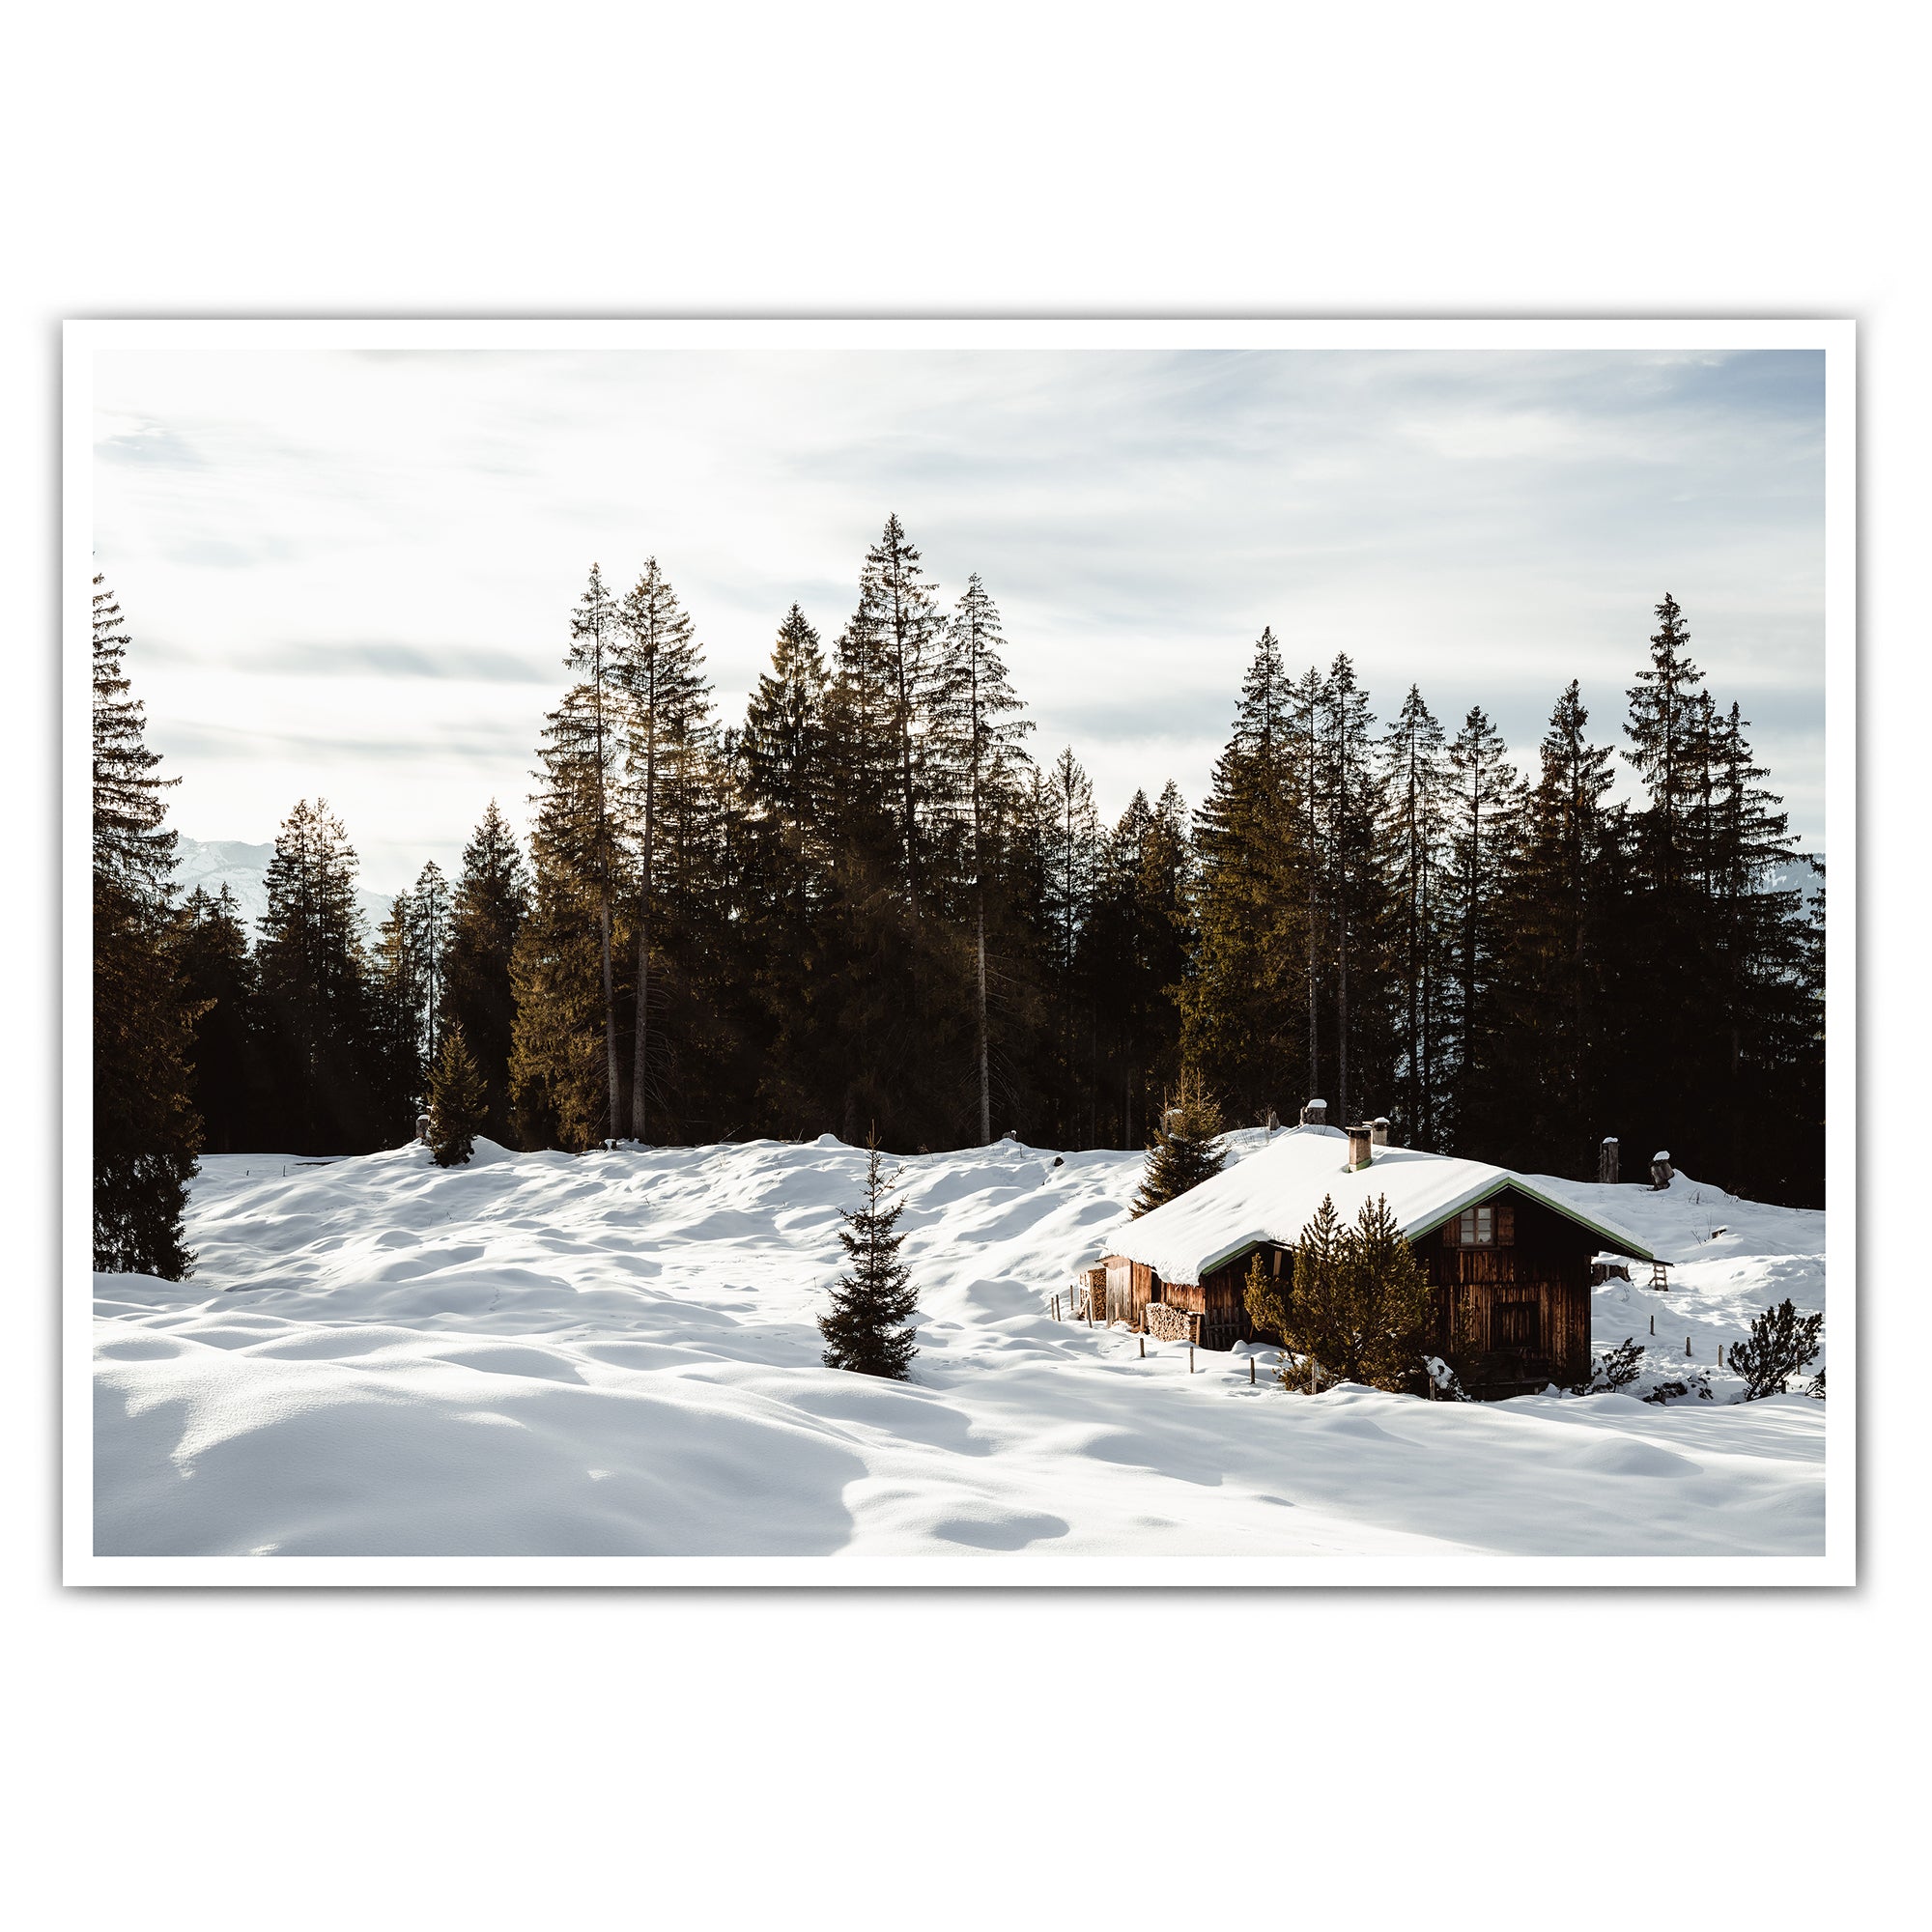 4one-pictures-natur-poster-winter-bild-berg-waelder-wald-schnee-eis-kunstdruck-print-1_bc2978f0-1816-47bb-8d62-342d3244d3fe.jpg